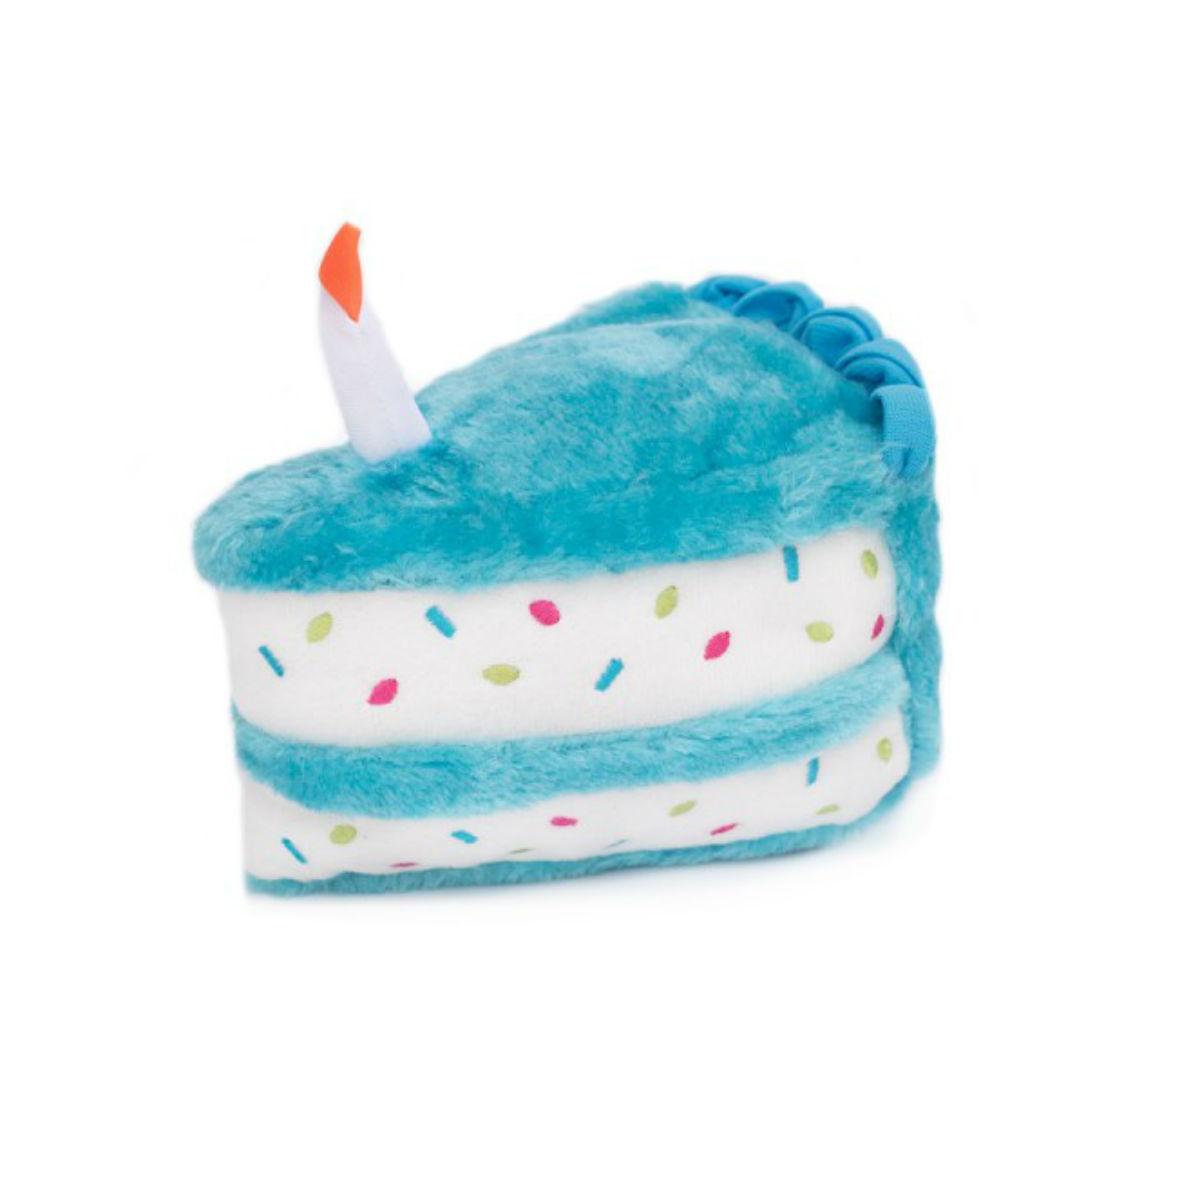 ZippyPaws Birthday Cake Plush Dog Toy - Blue